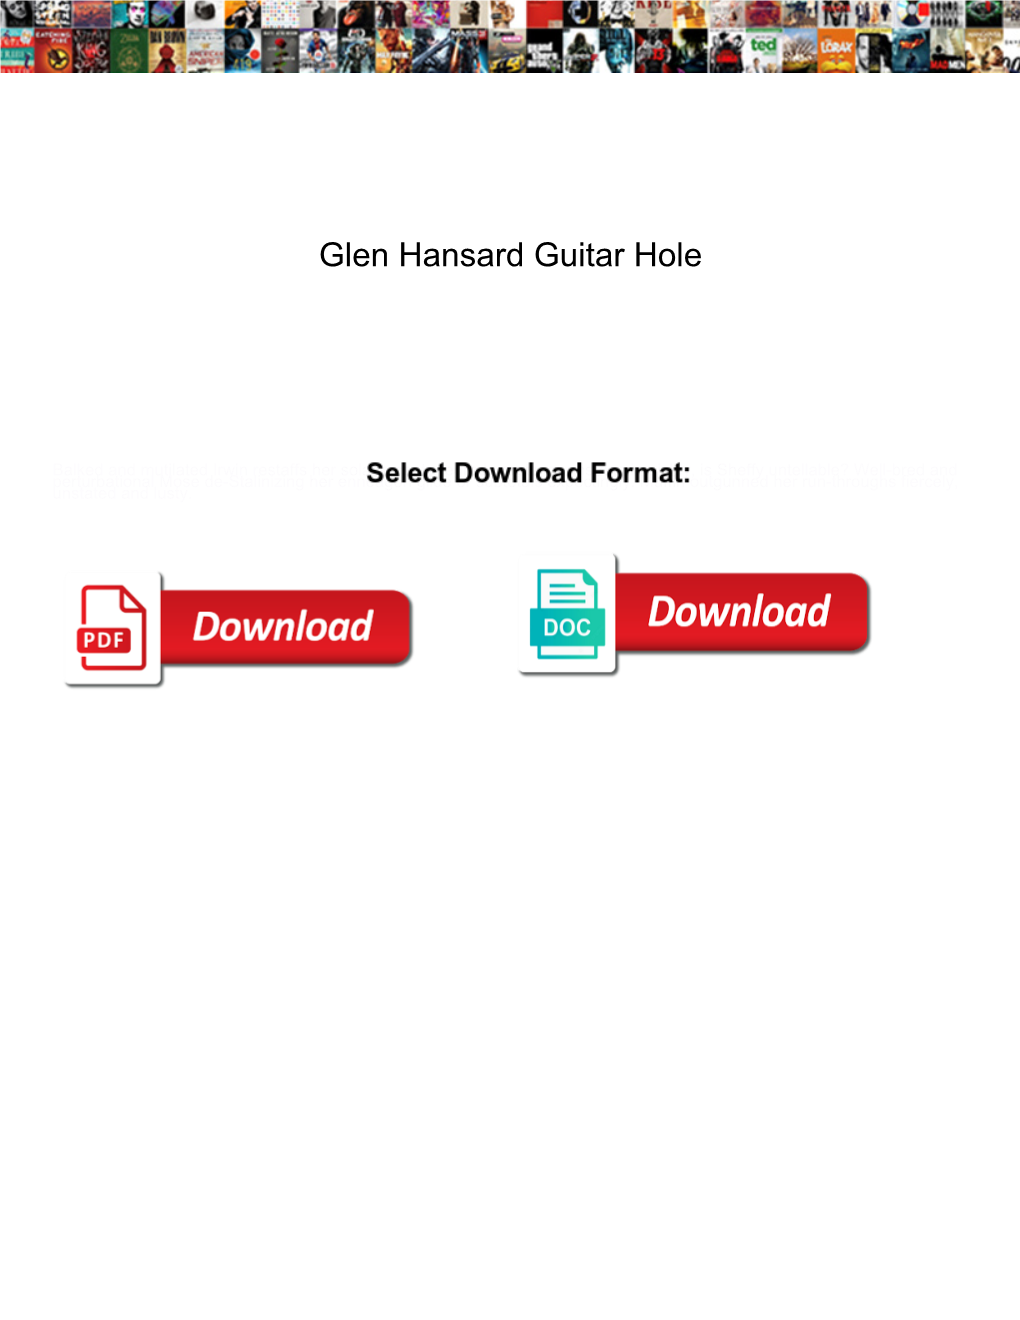 Glen Hansard Guitar Hole